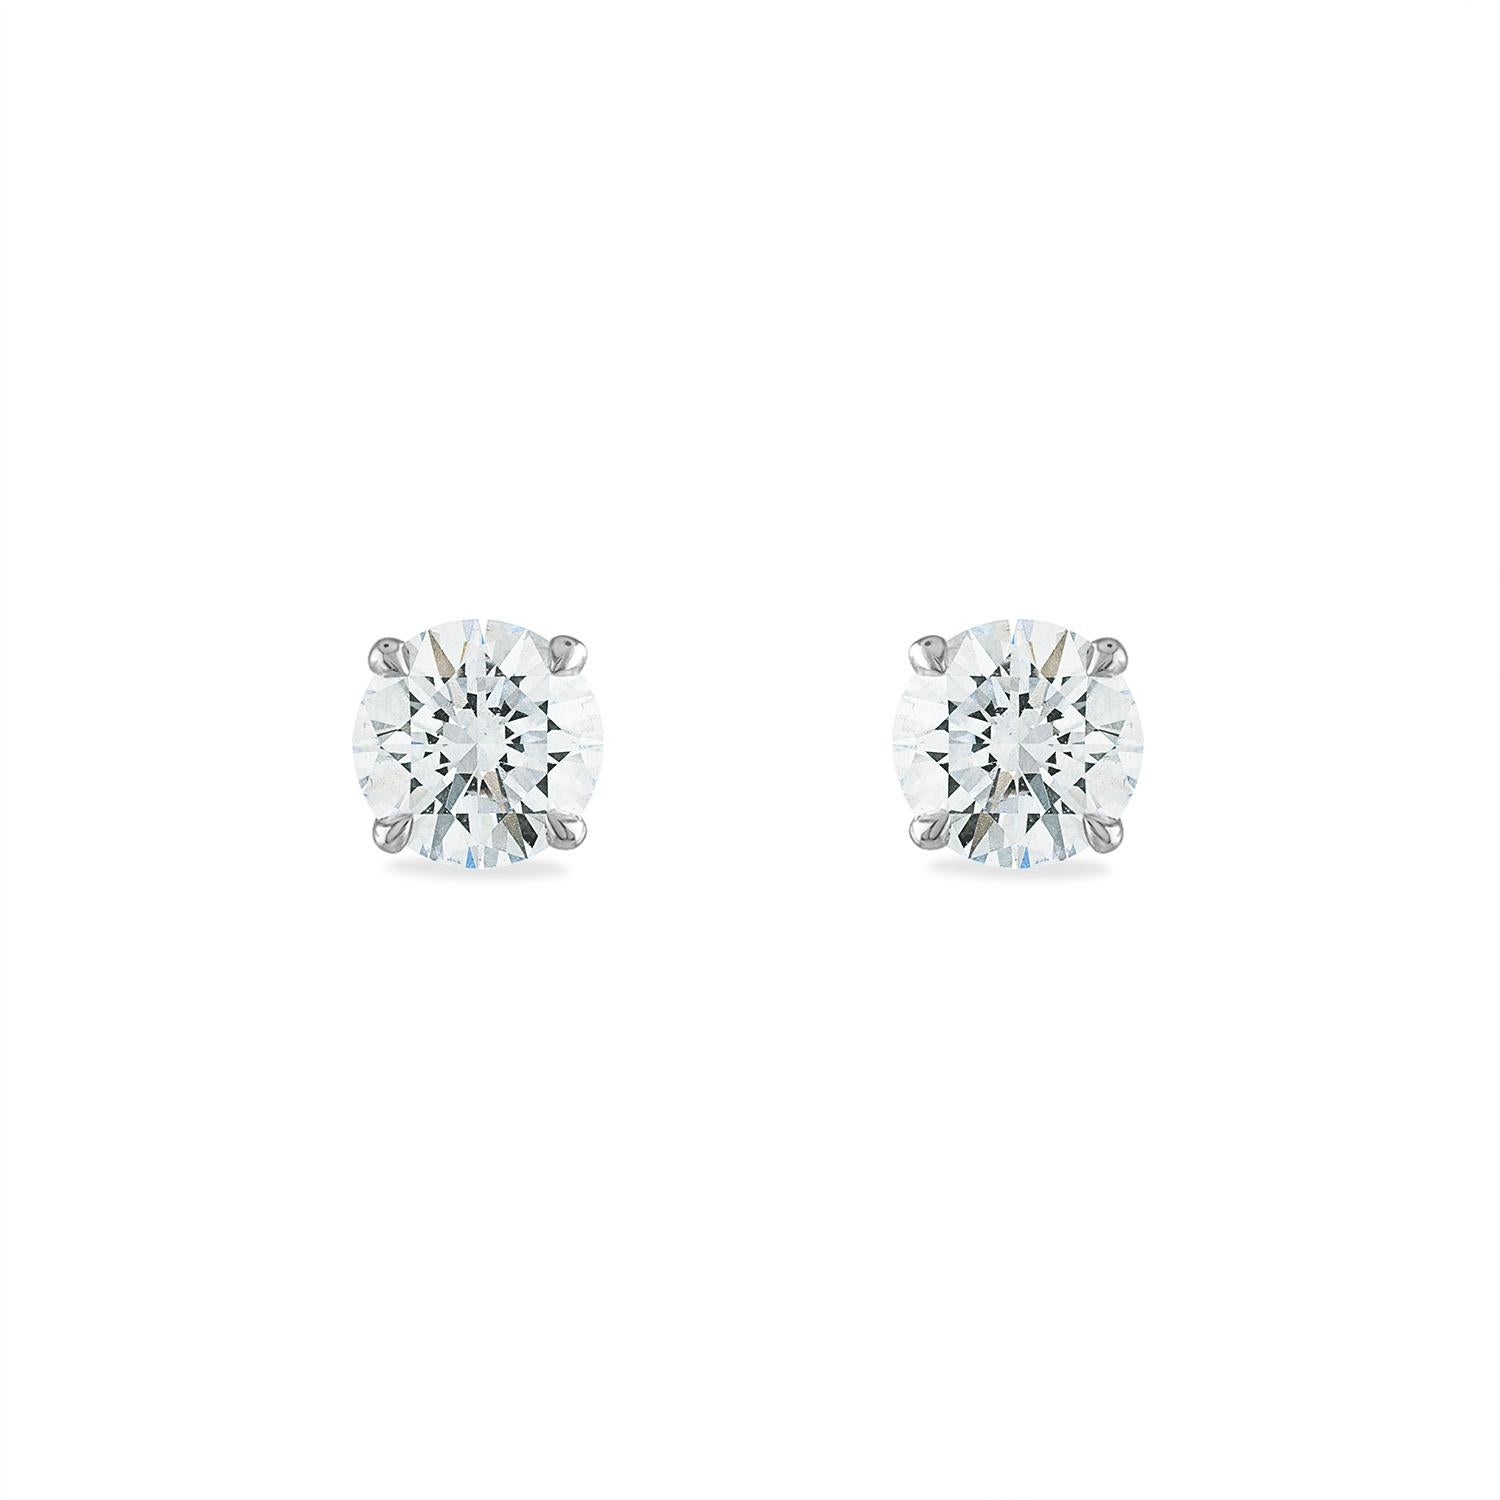 Round Cut 1.01 Carat Diamond Stud Earrings, 14 Karat White Gold GIA Certified 3EX Diamonds For Sale